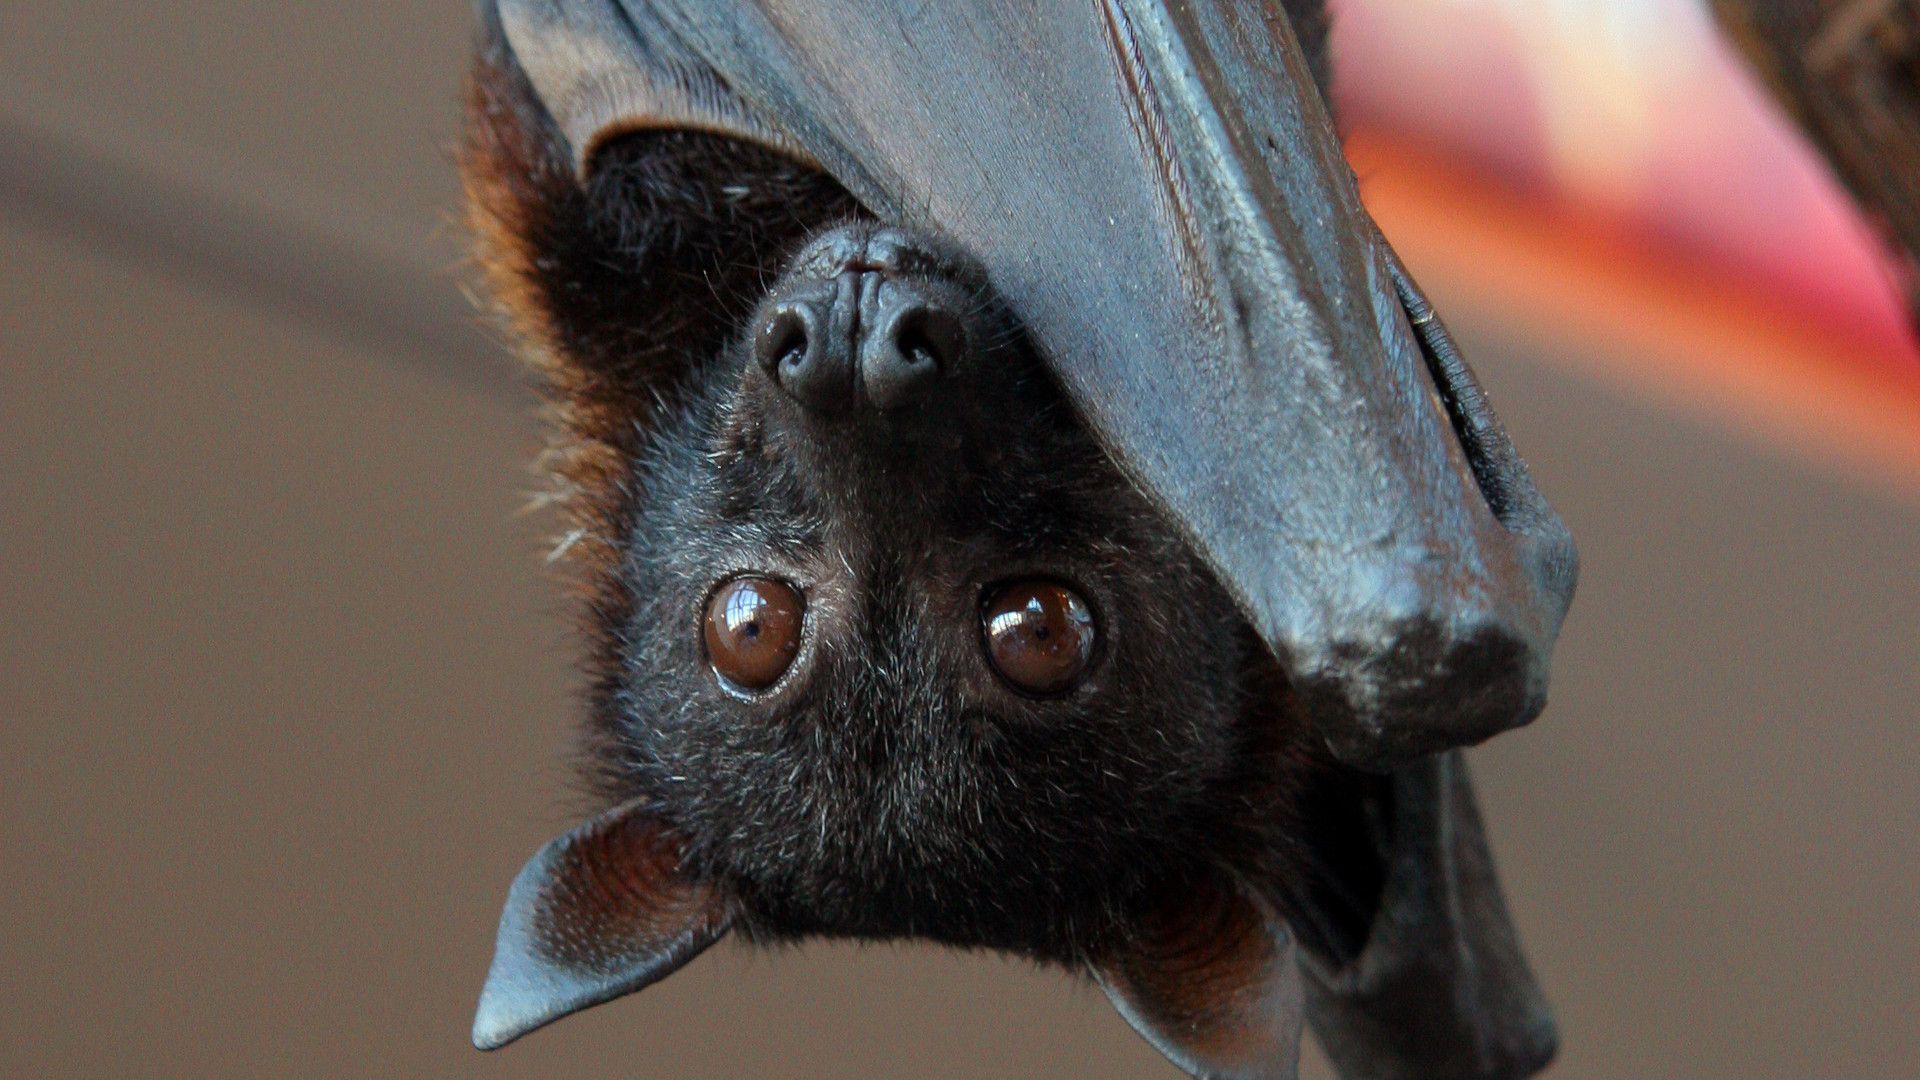 A close-up of a large, furry bat handing upside down.